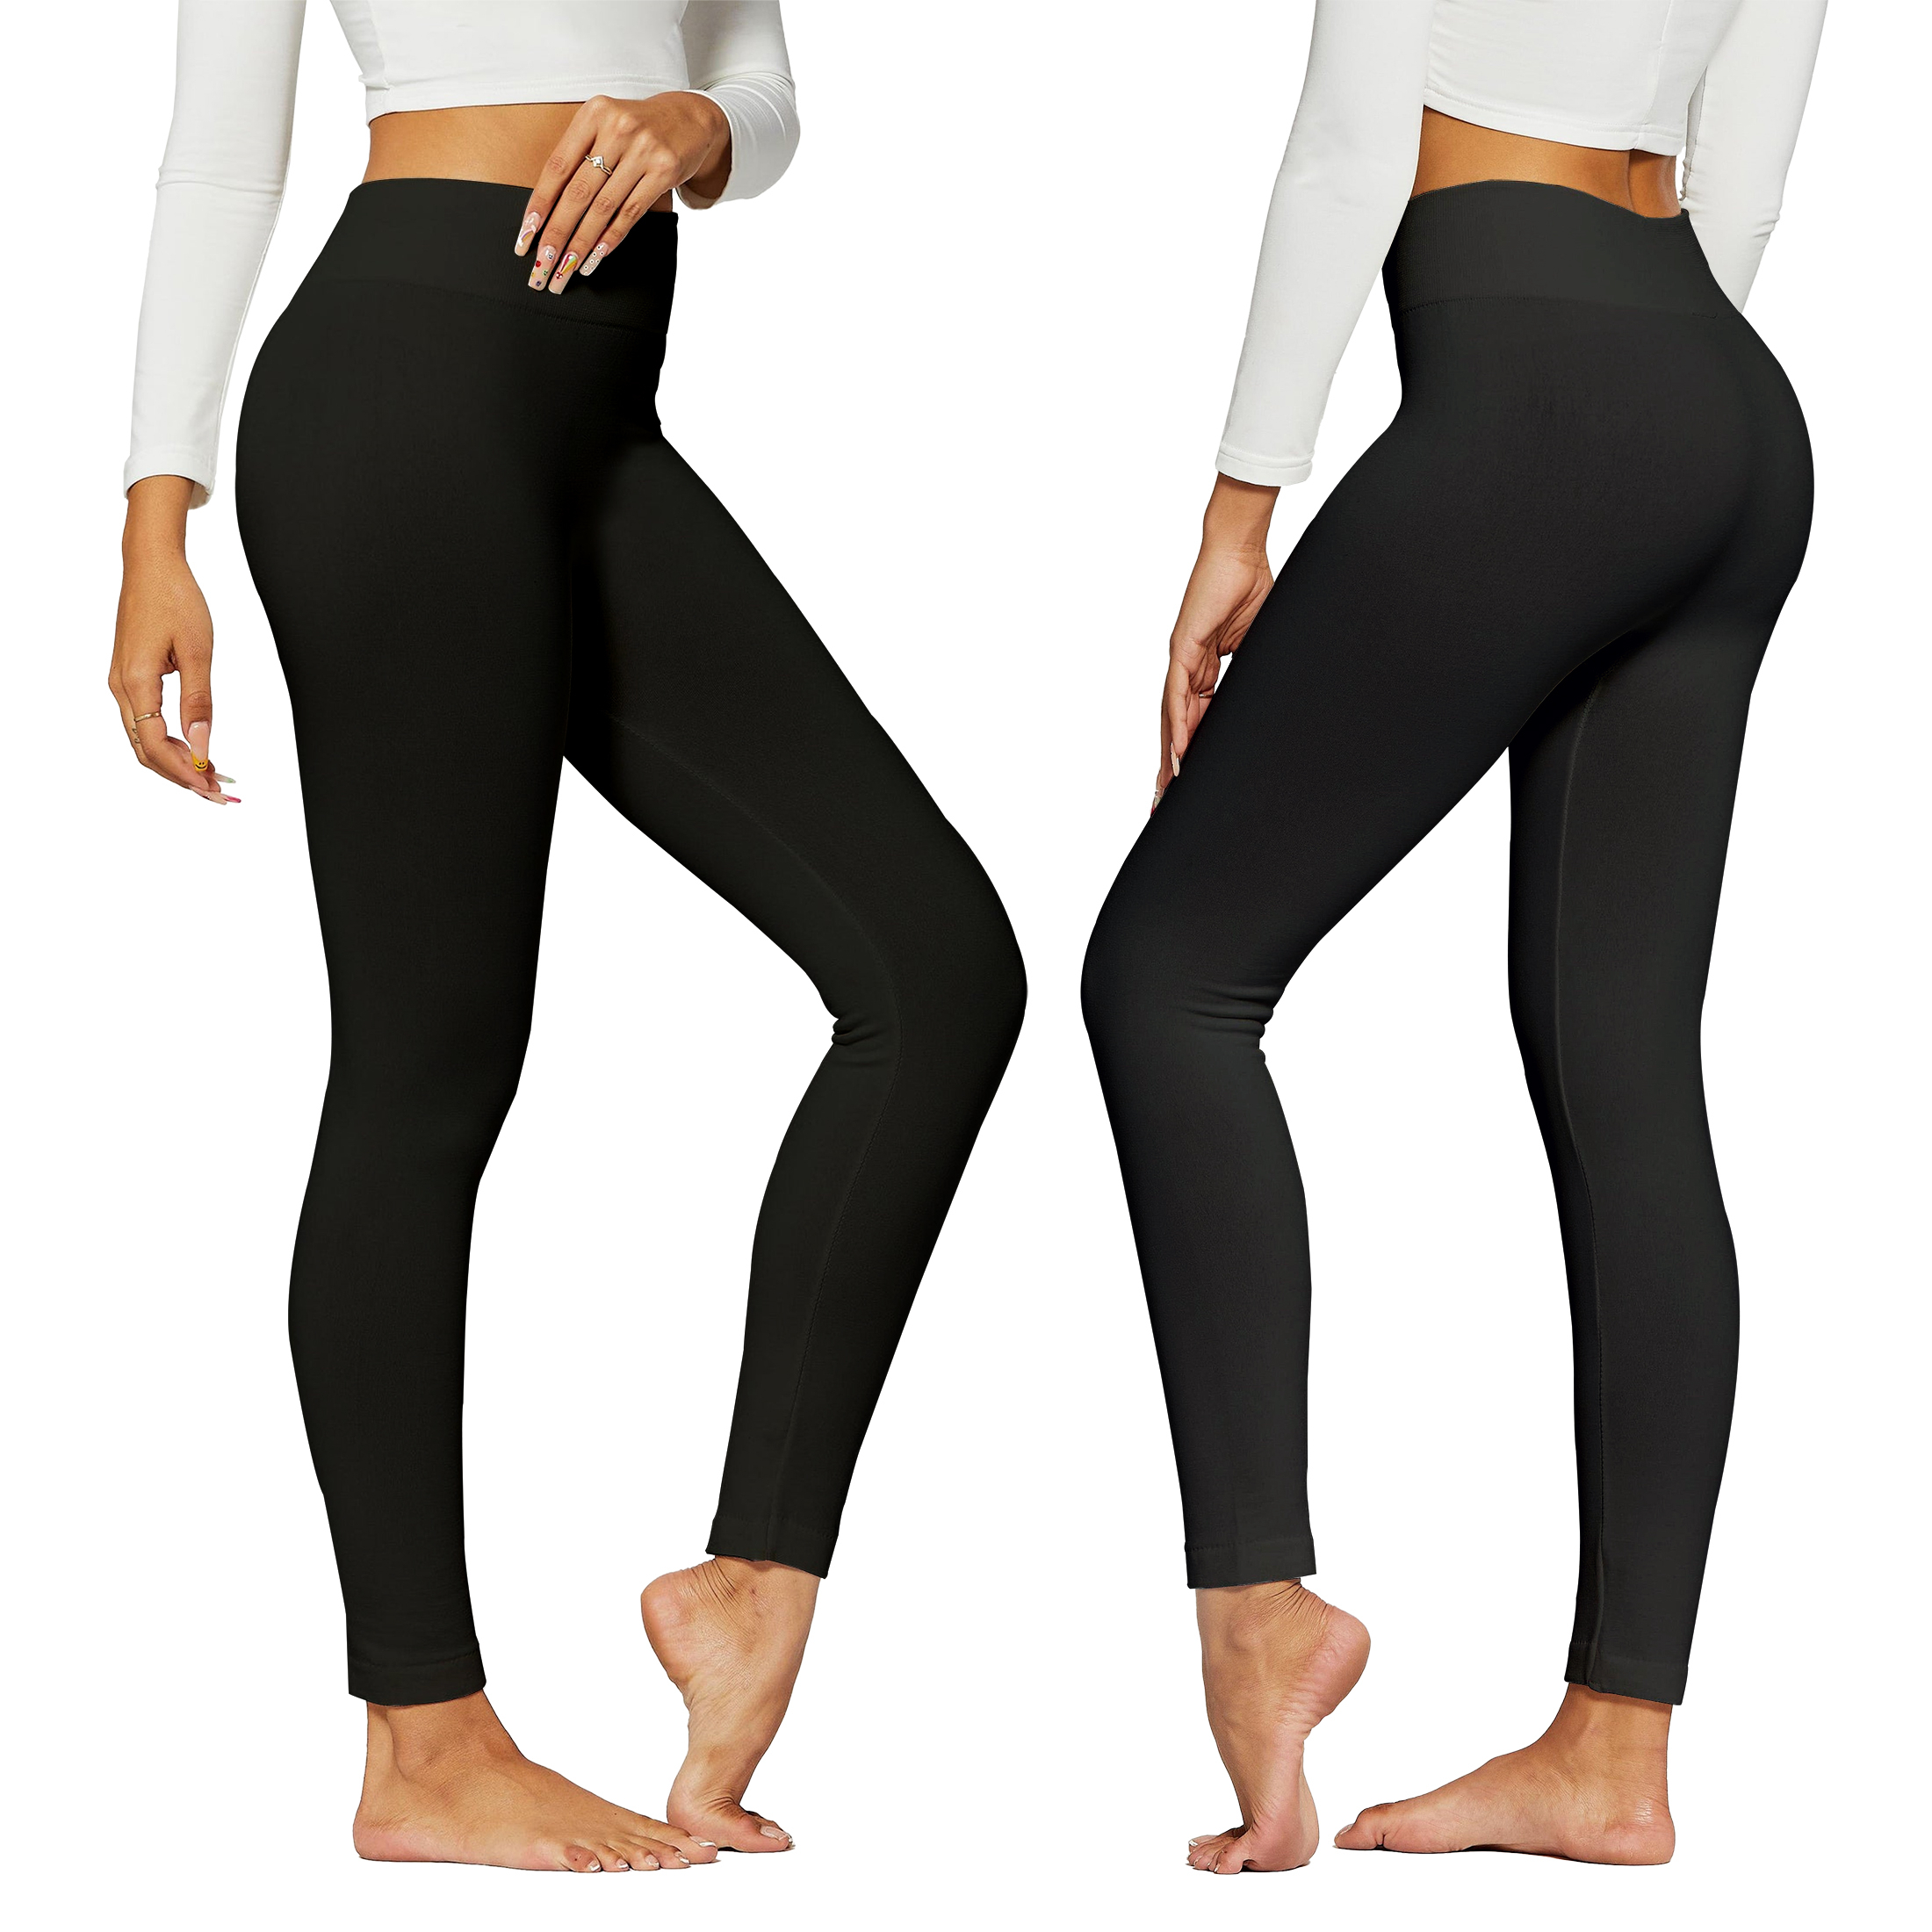 4-Pack:Women's Premium Quality High-Waist Fleece-Lined Leggings (Plus Size Available) - Black, Small/Medium